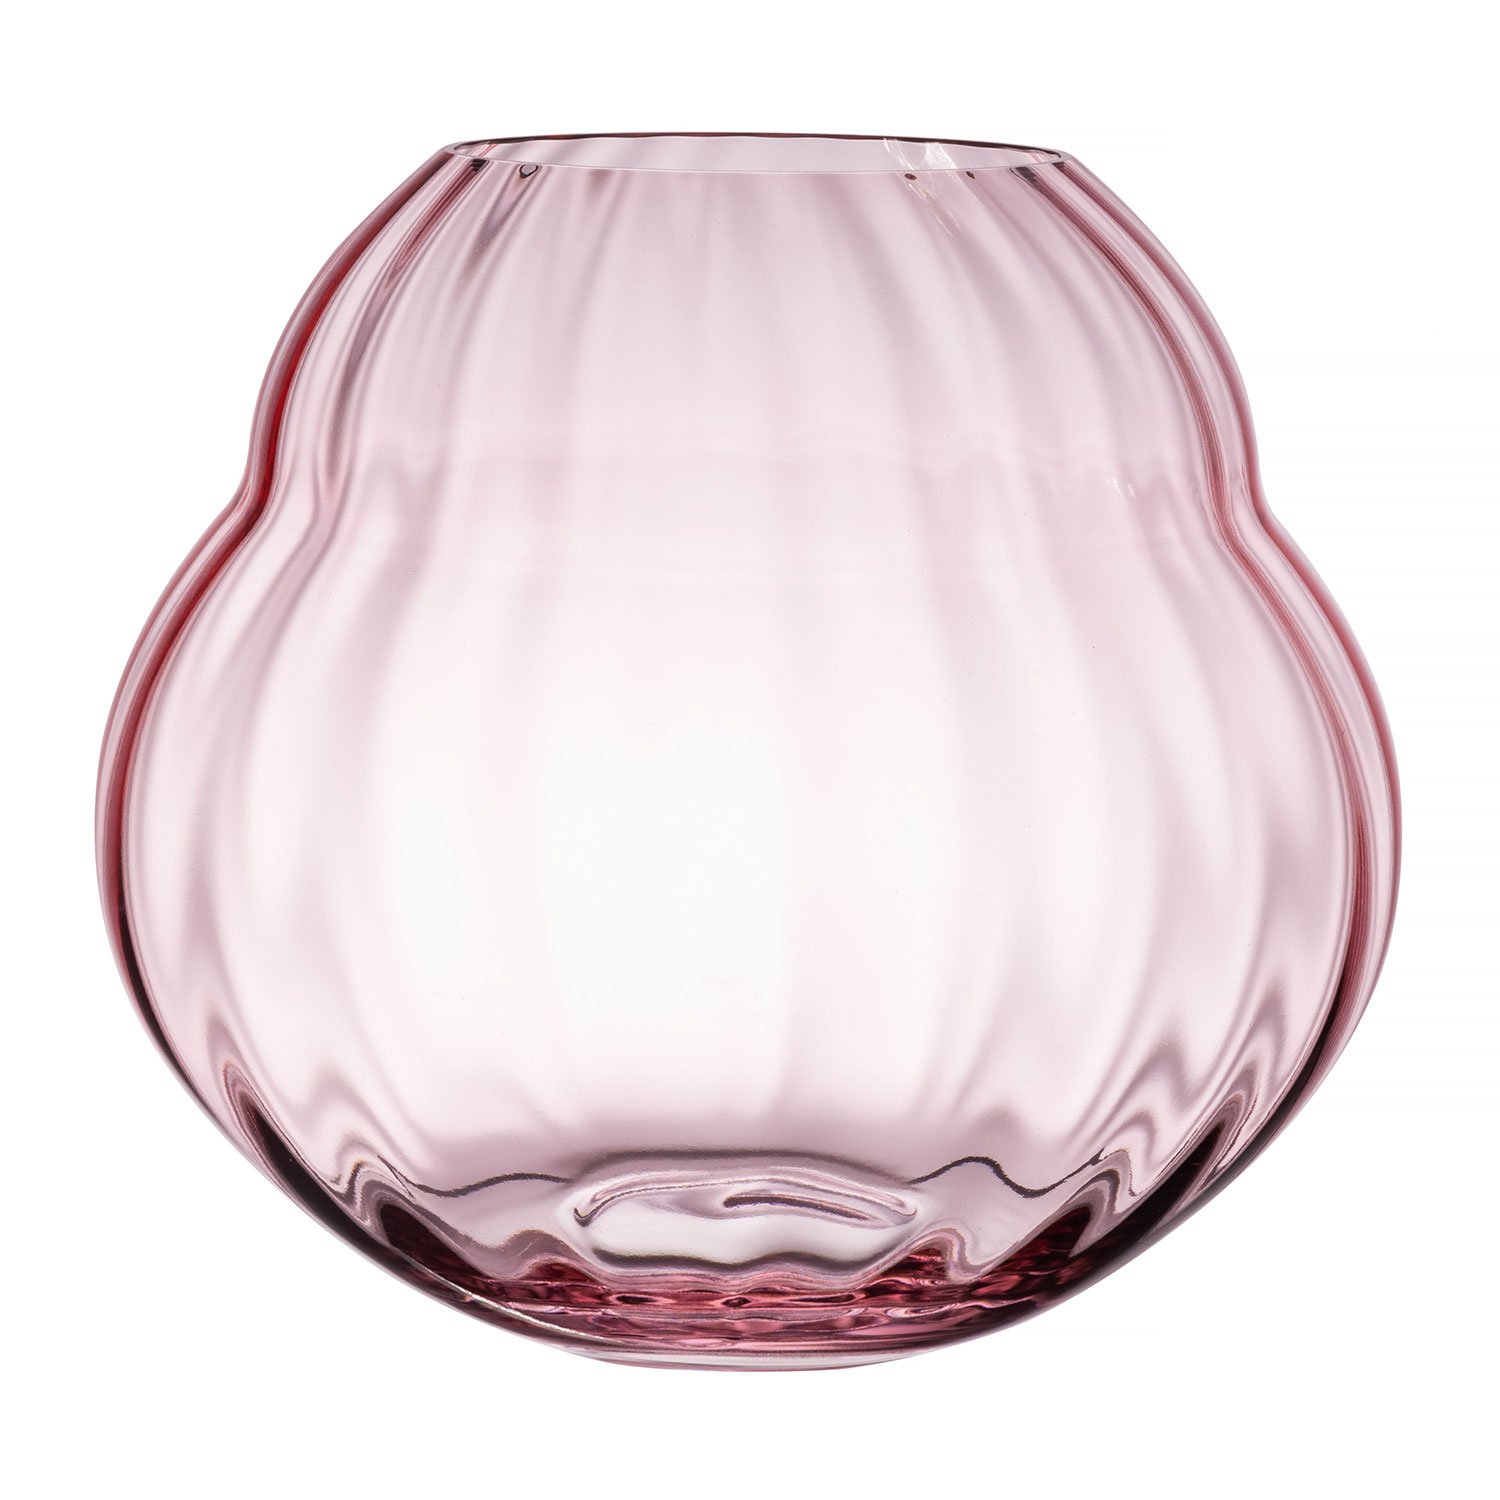 Rose Garden Glass Ваза/подсвечник 17 см pink Villeroy & Boch
https://spb.v-b.ru
г.Санкт-Петербург
eshop@v-b.spb.ru
+7(812)3801977